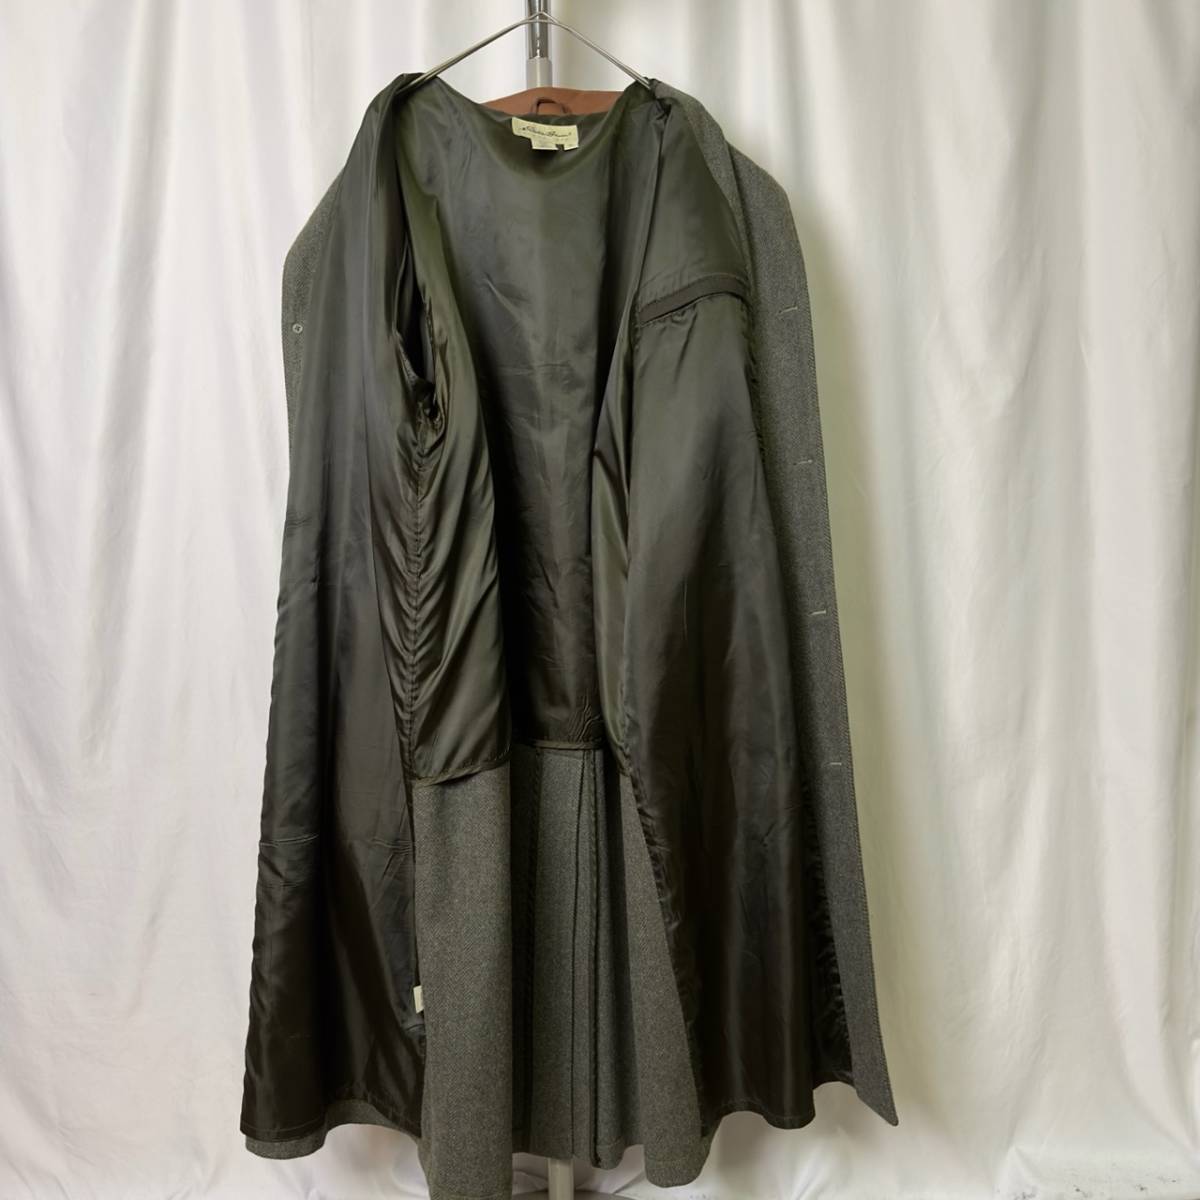 90s USA производства Eddie Bauer шерстяное пальто XL большой размер "в елочку" воротник кожа белый бирка Eddie Bauer 80s 00s б/у одежда Old Vintage 